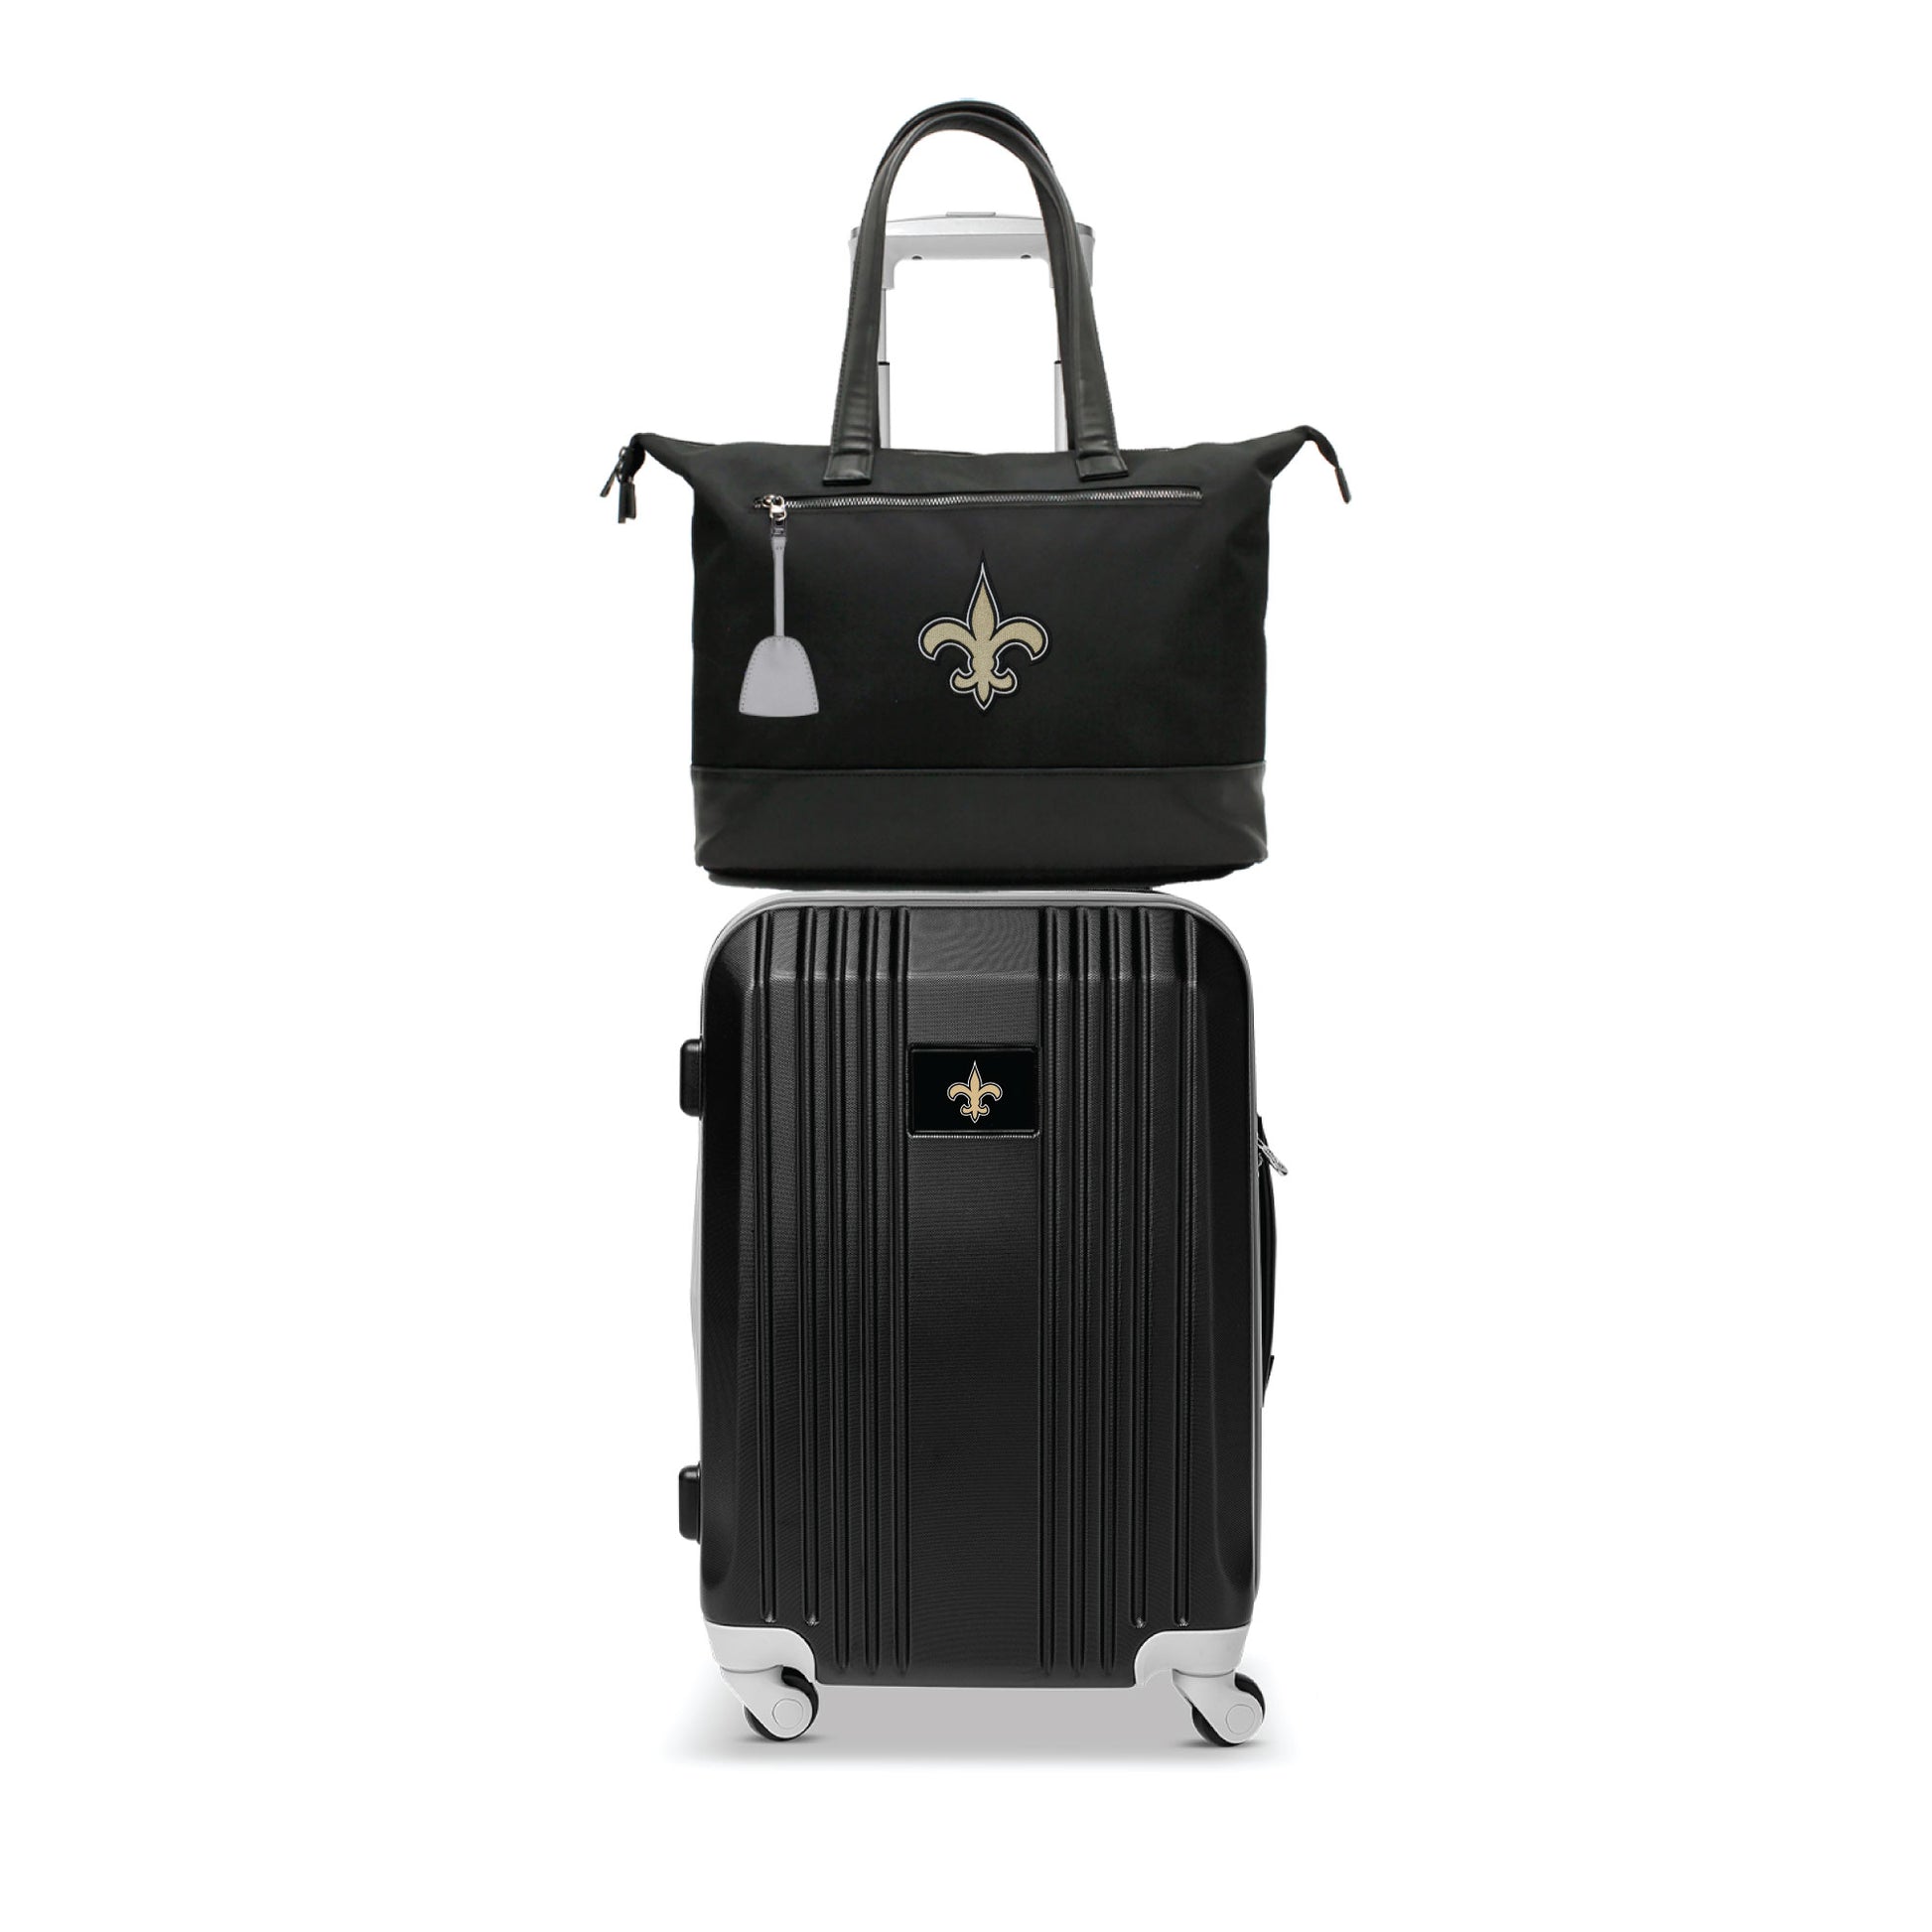 New Orleans Saints Premium Laptop Tote Bag and Luggage Set